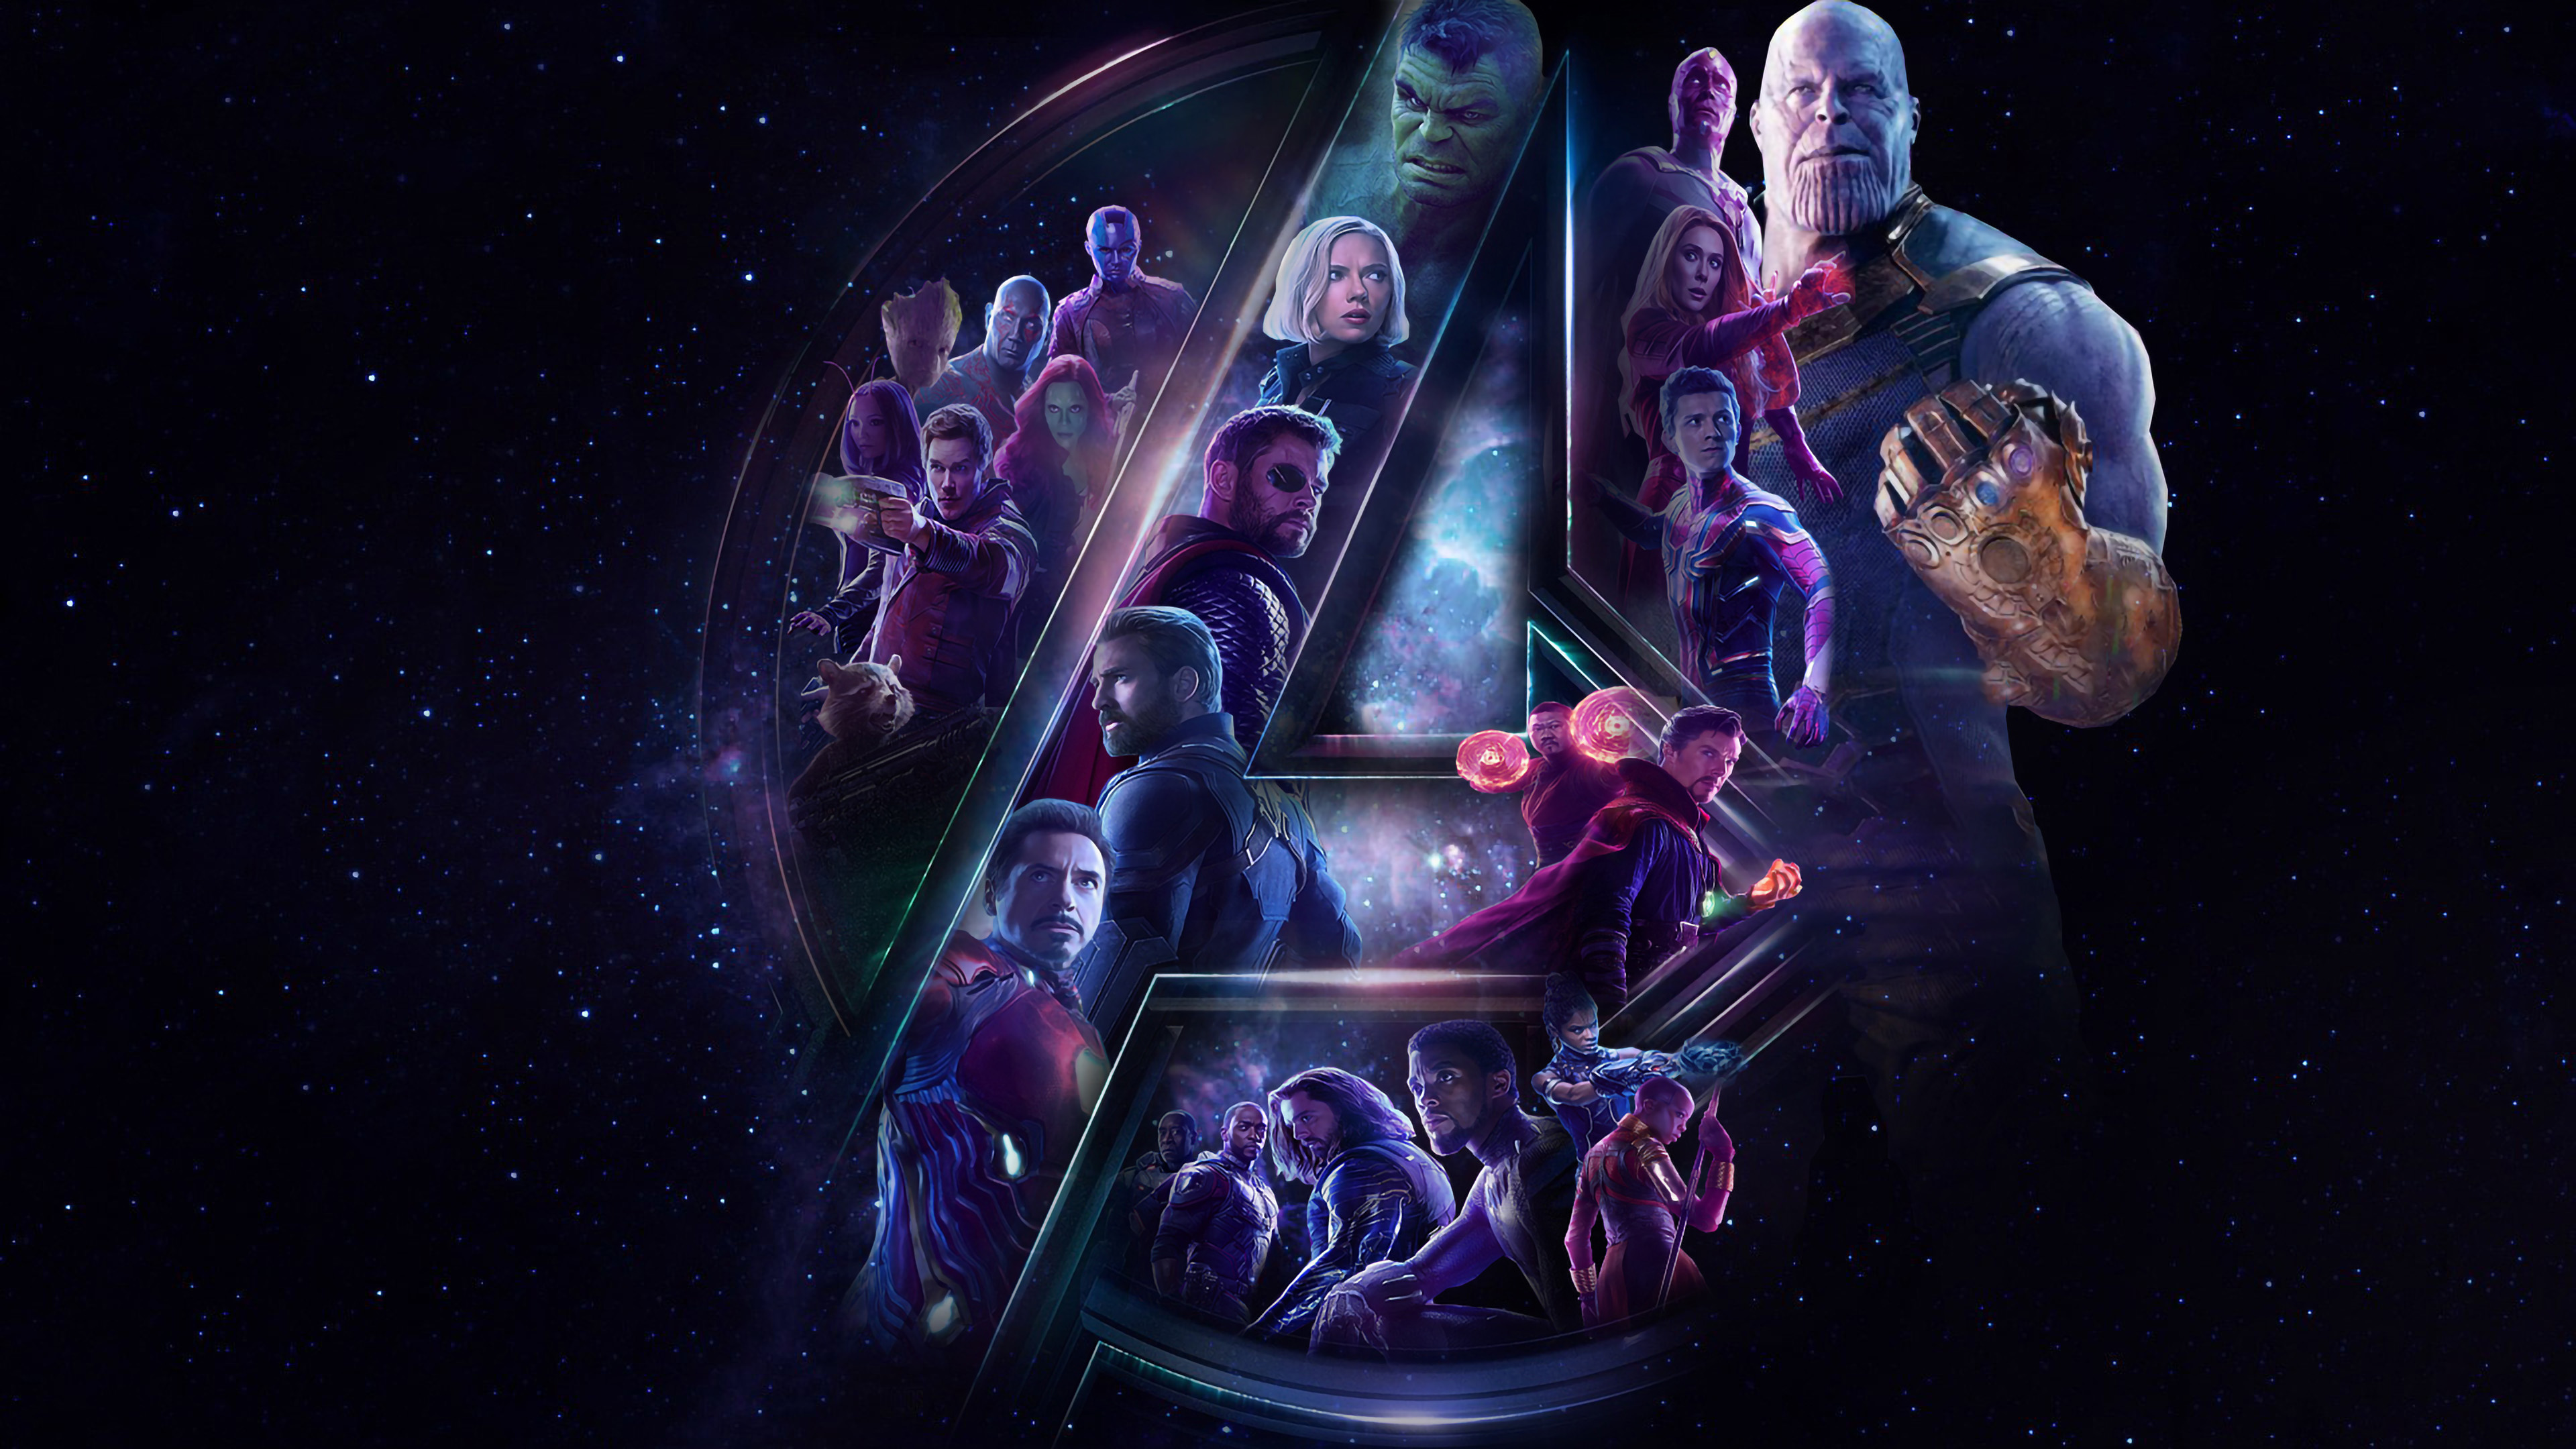 Avengers Infinity War All Superheros and Villain Poster Artwork 4K